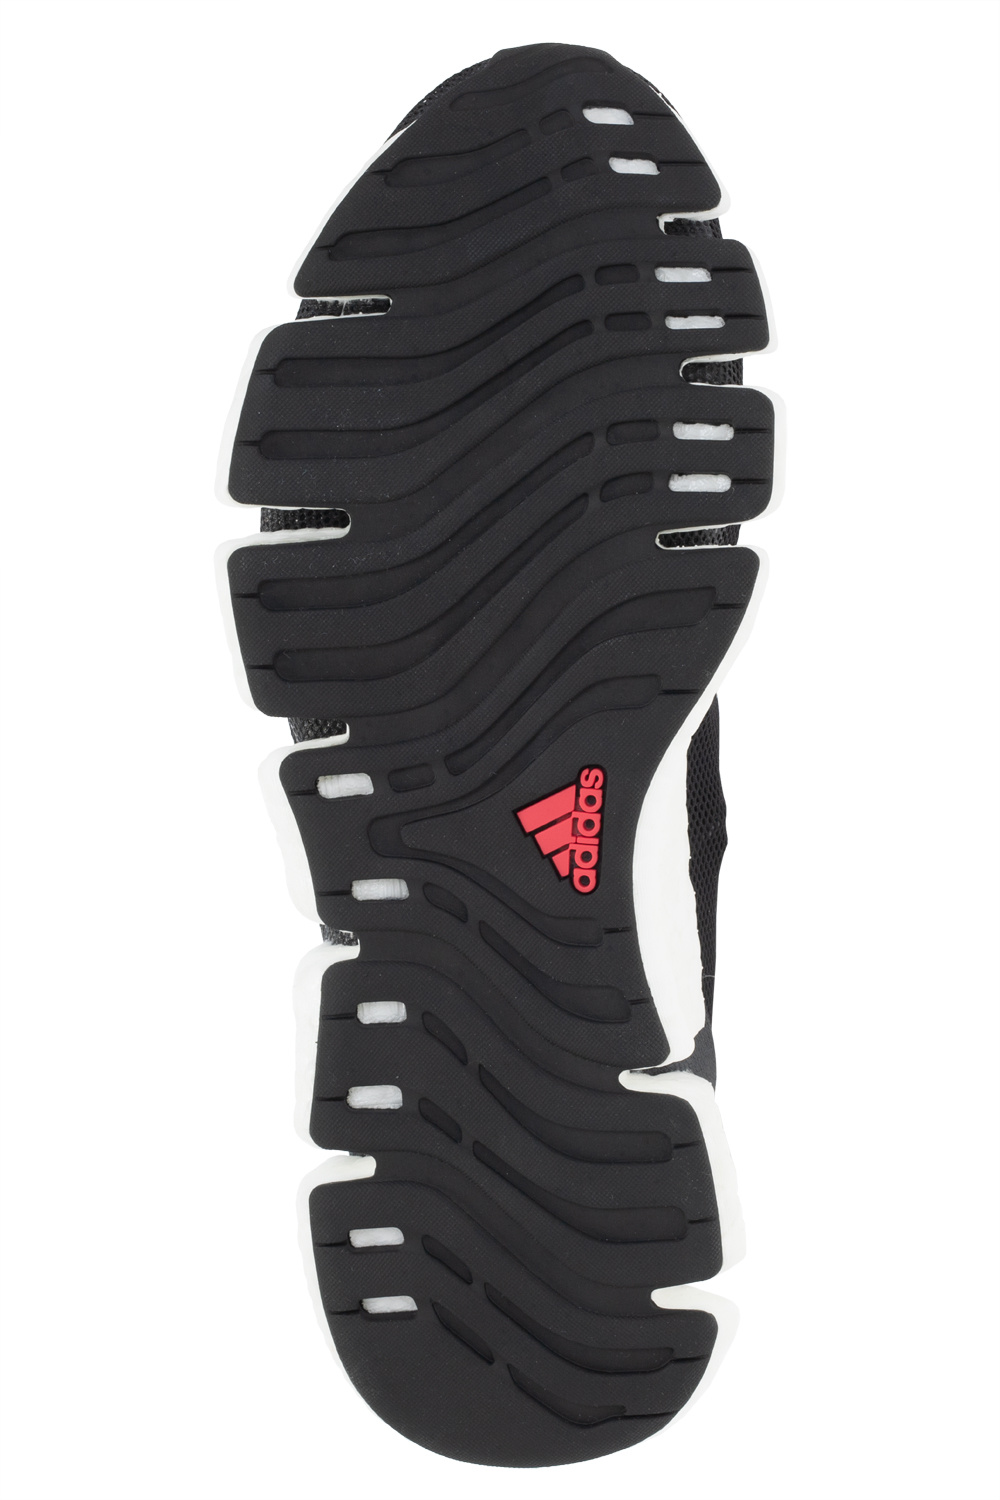 Adidas Sneakers stella mccartney climacool vento Women  DASMCCLIMACOOLVENTOGZ9995 Fabric 98€